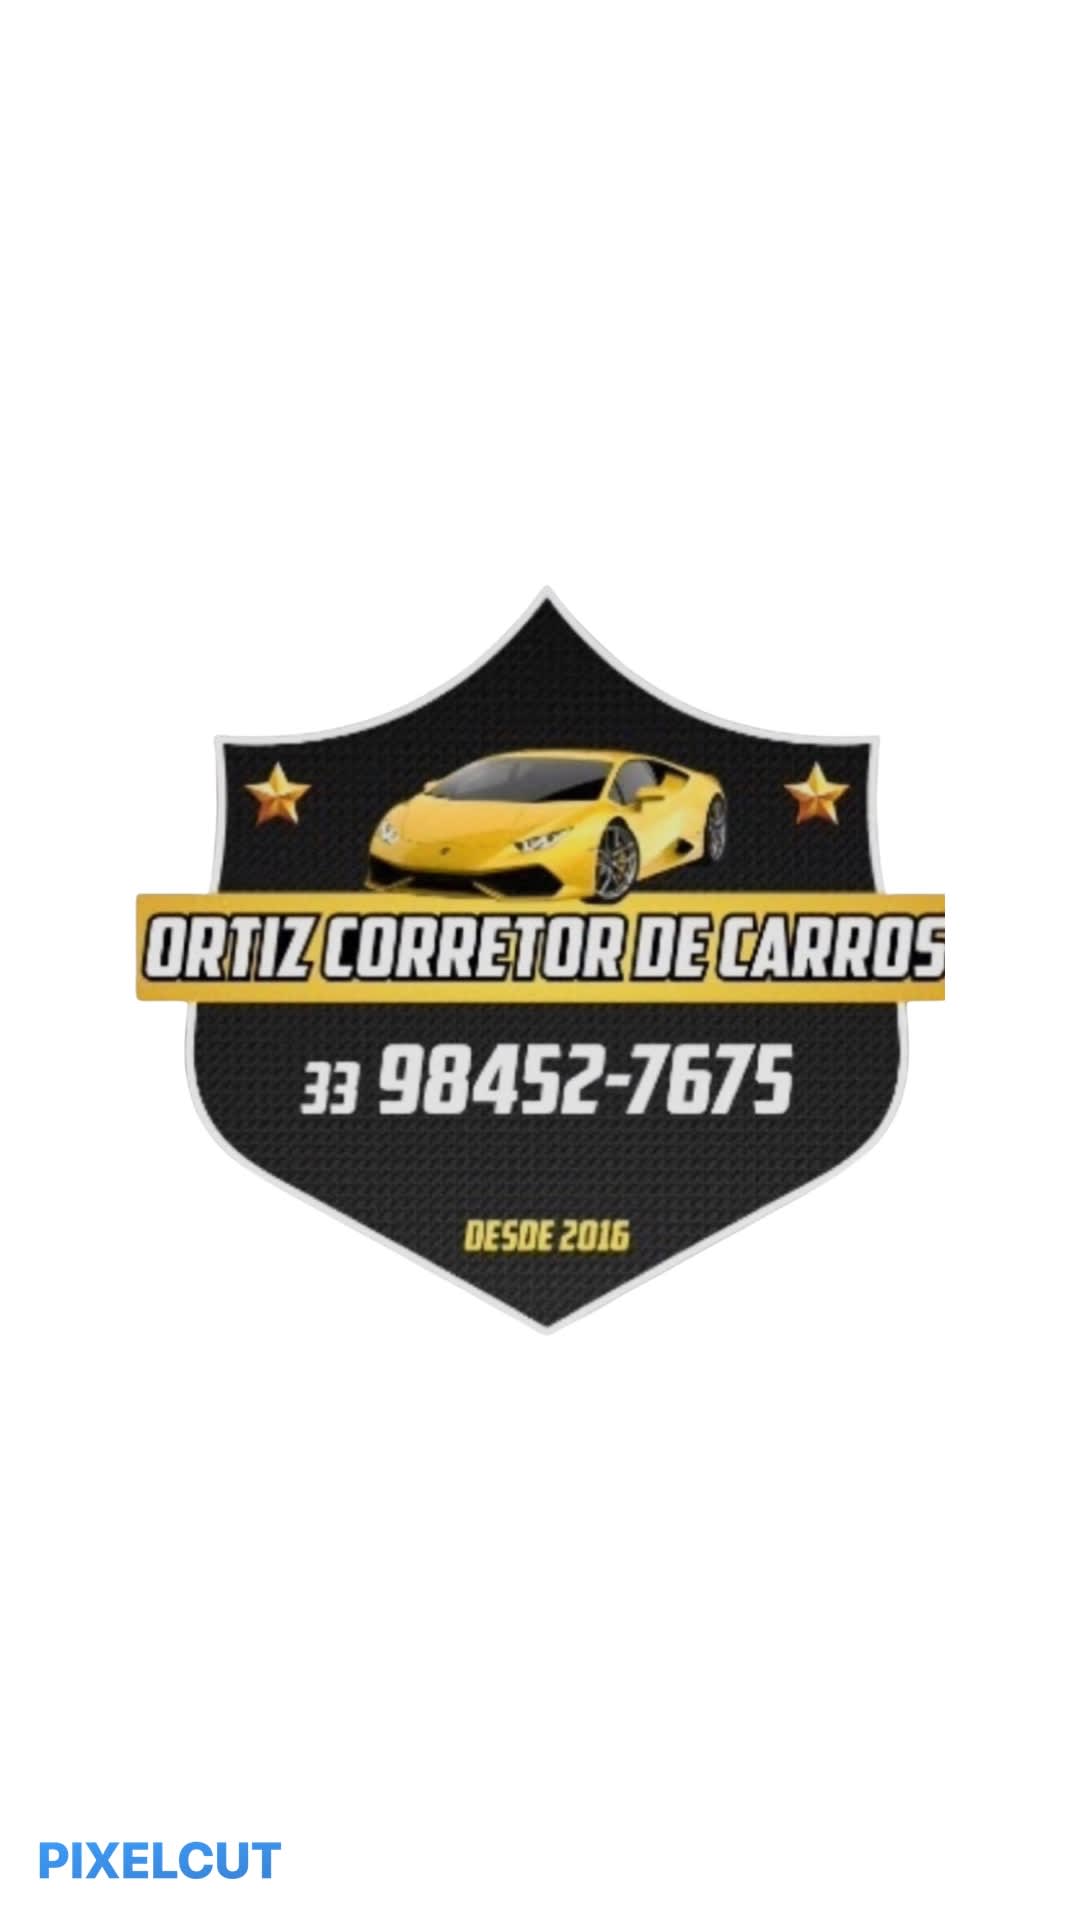 Ortiz Corretor de Carros